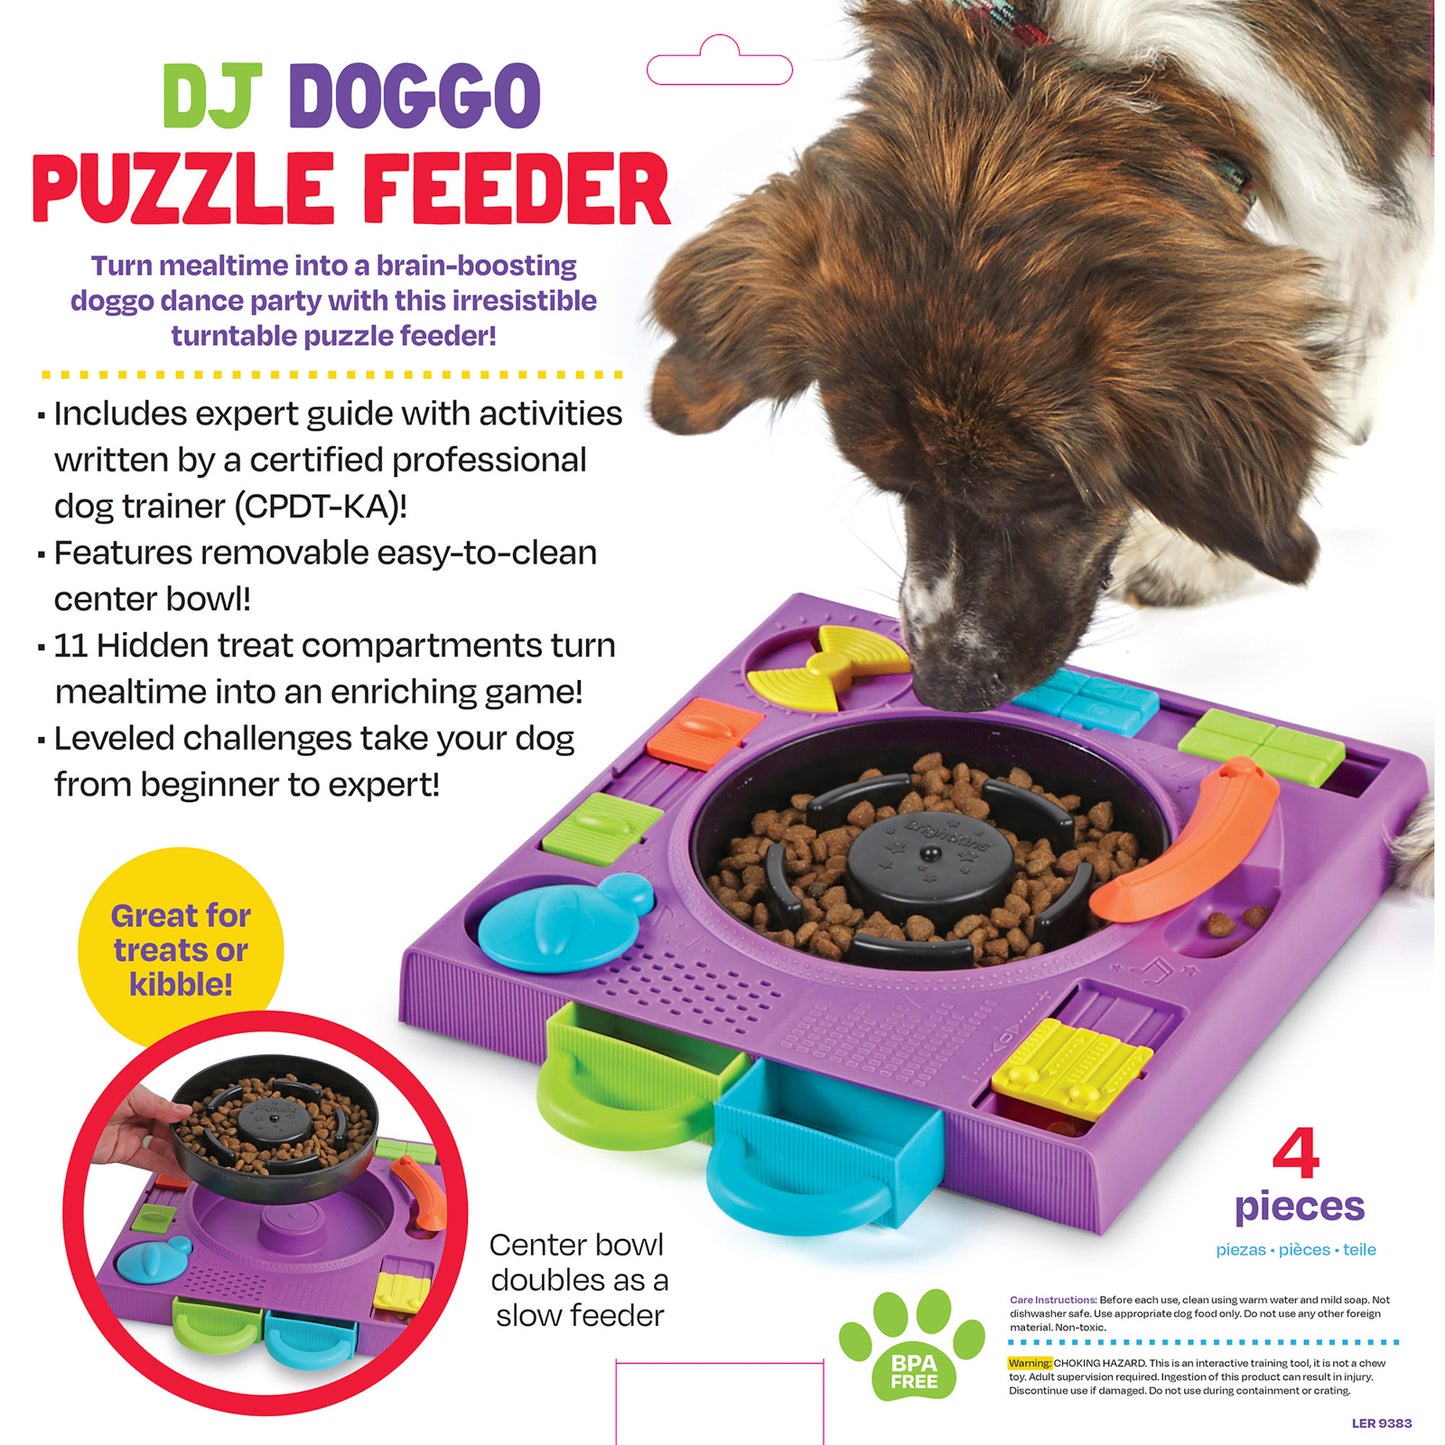 DJ Doggo Puzzle Feeder